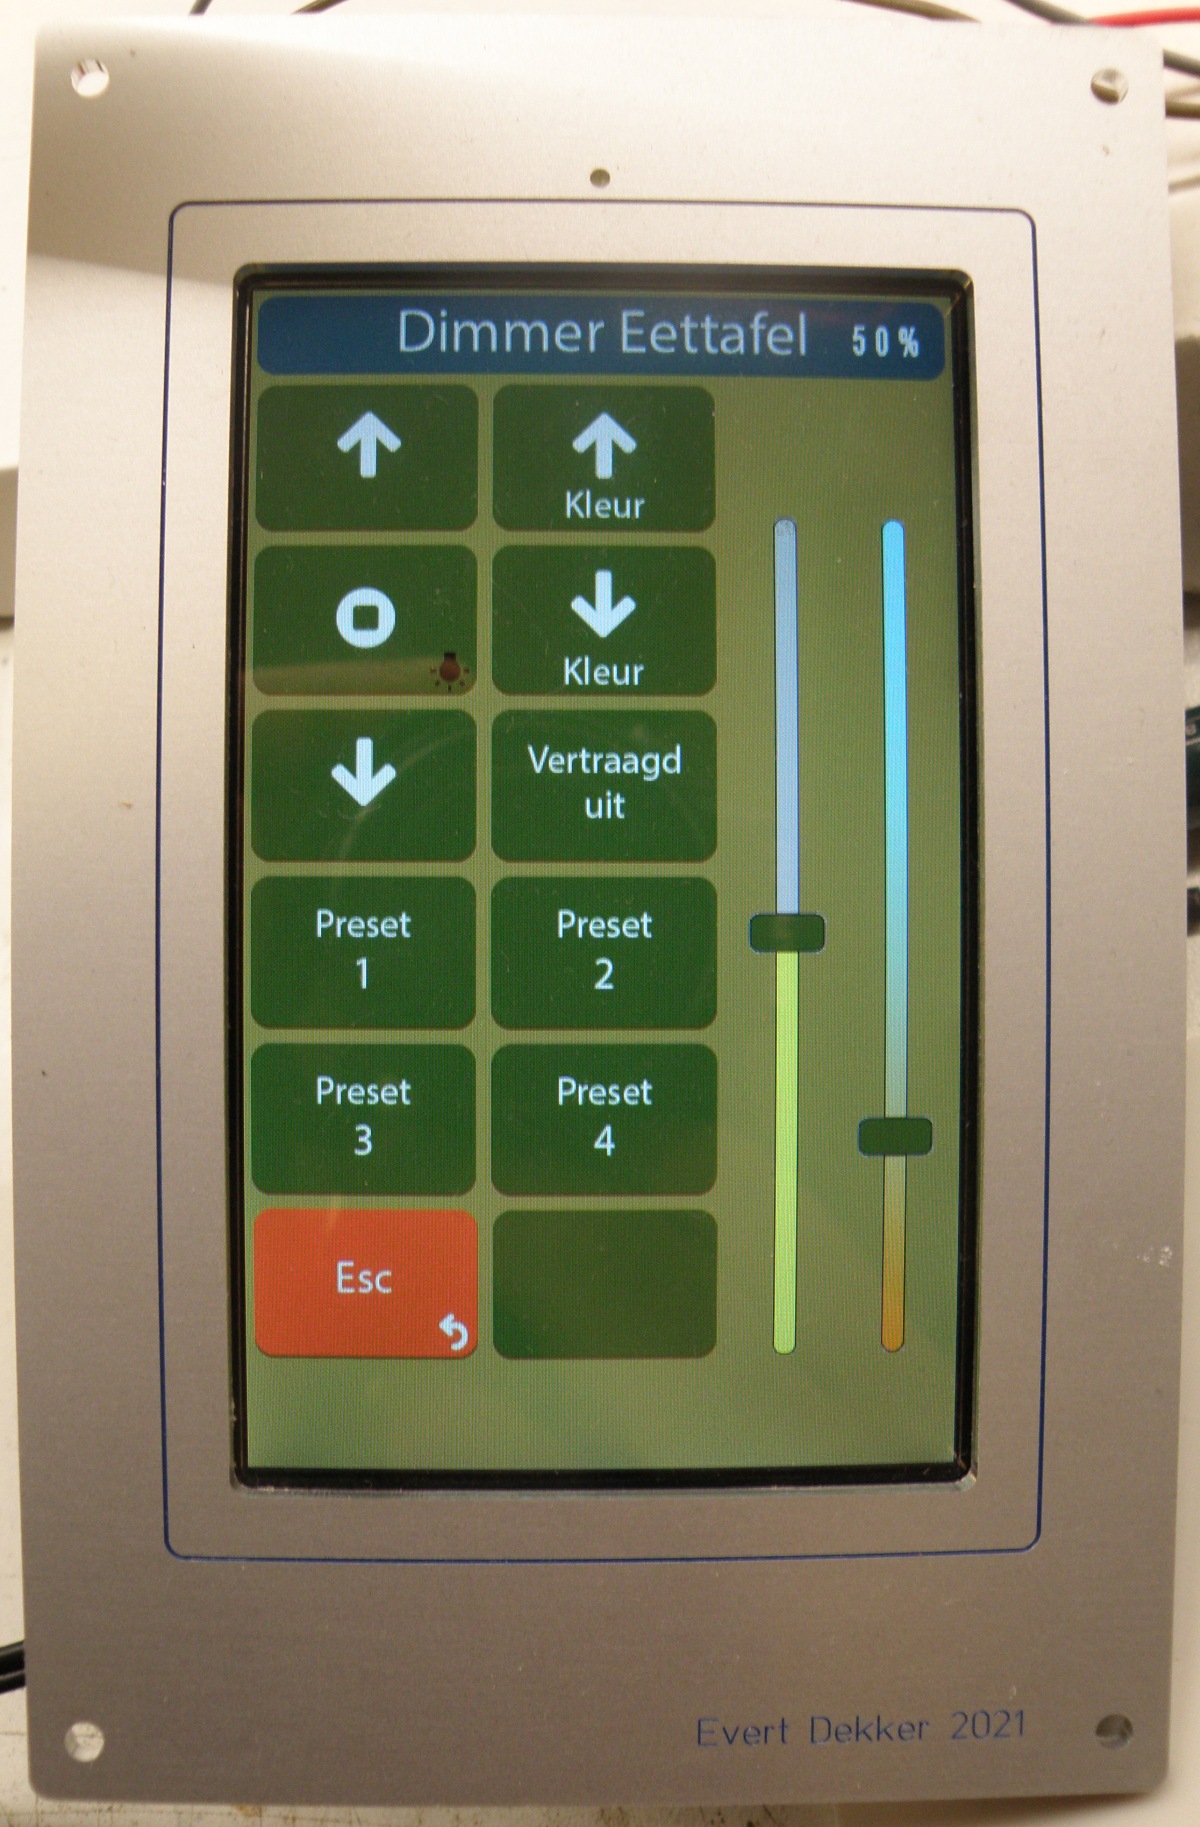 Dimmer menu example